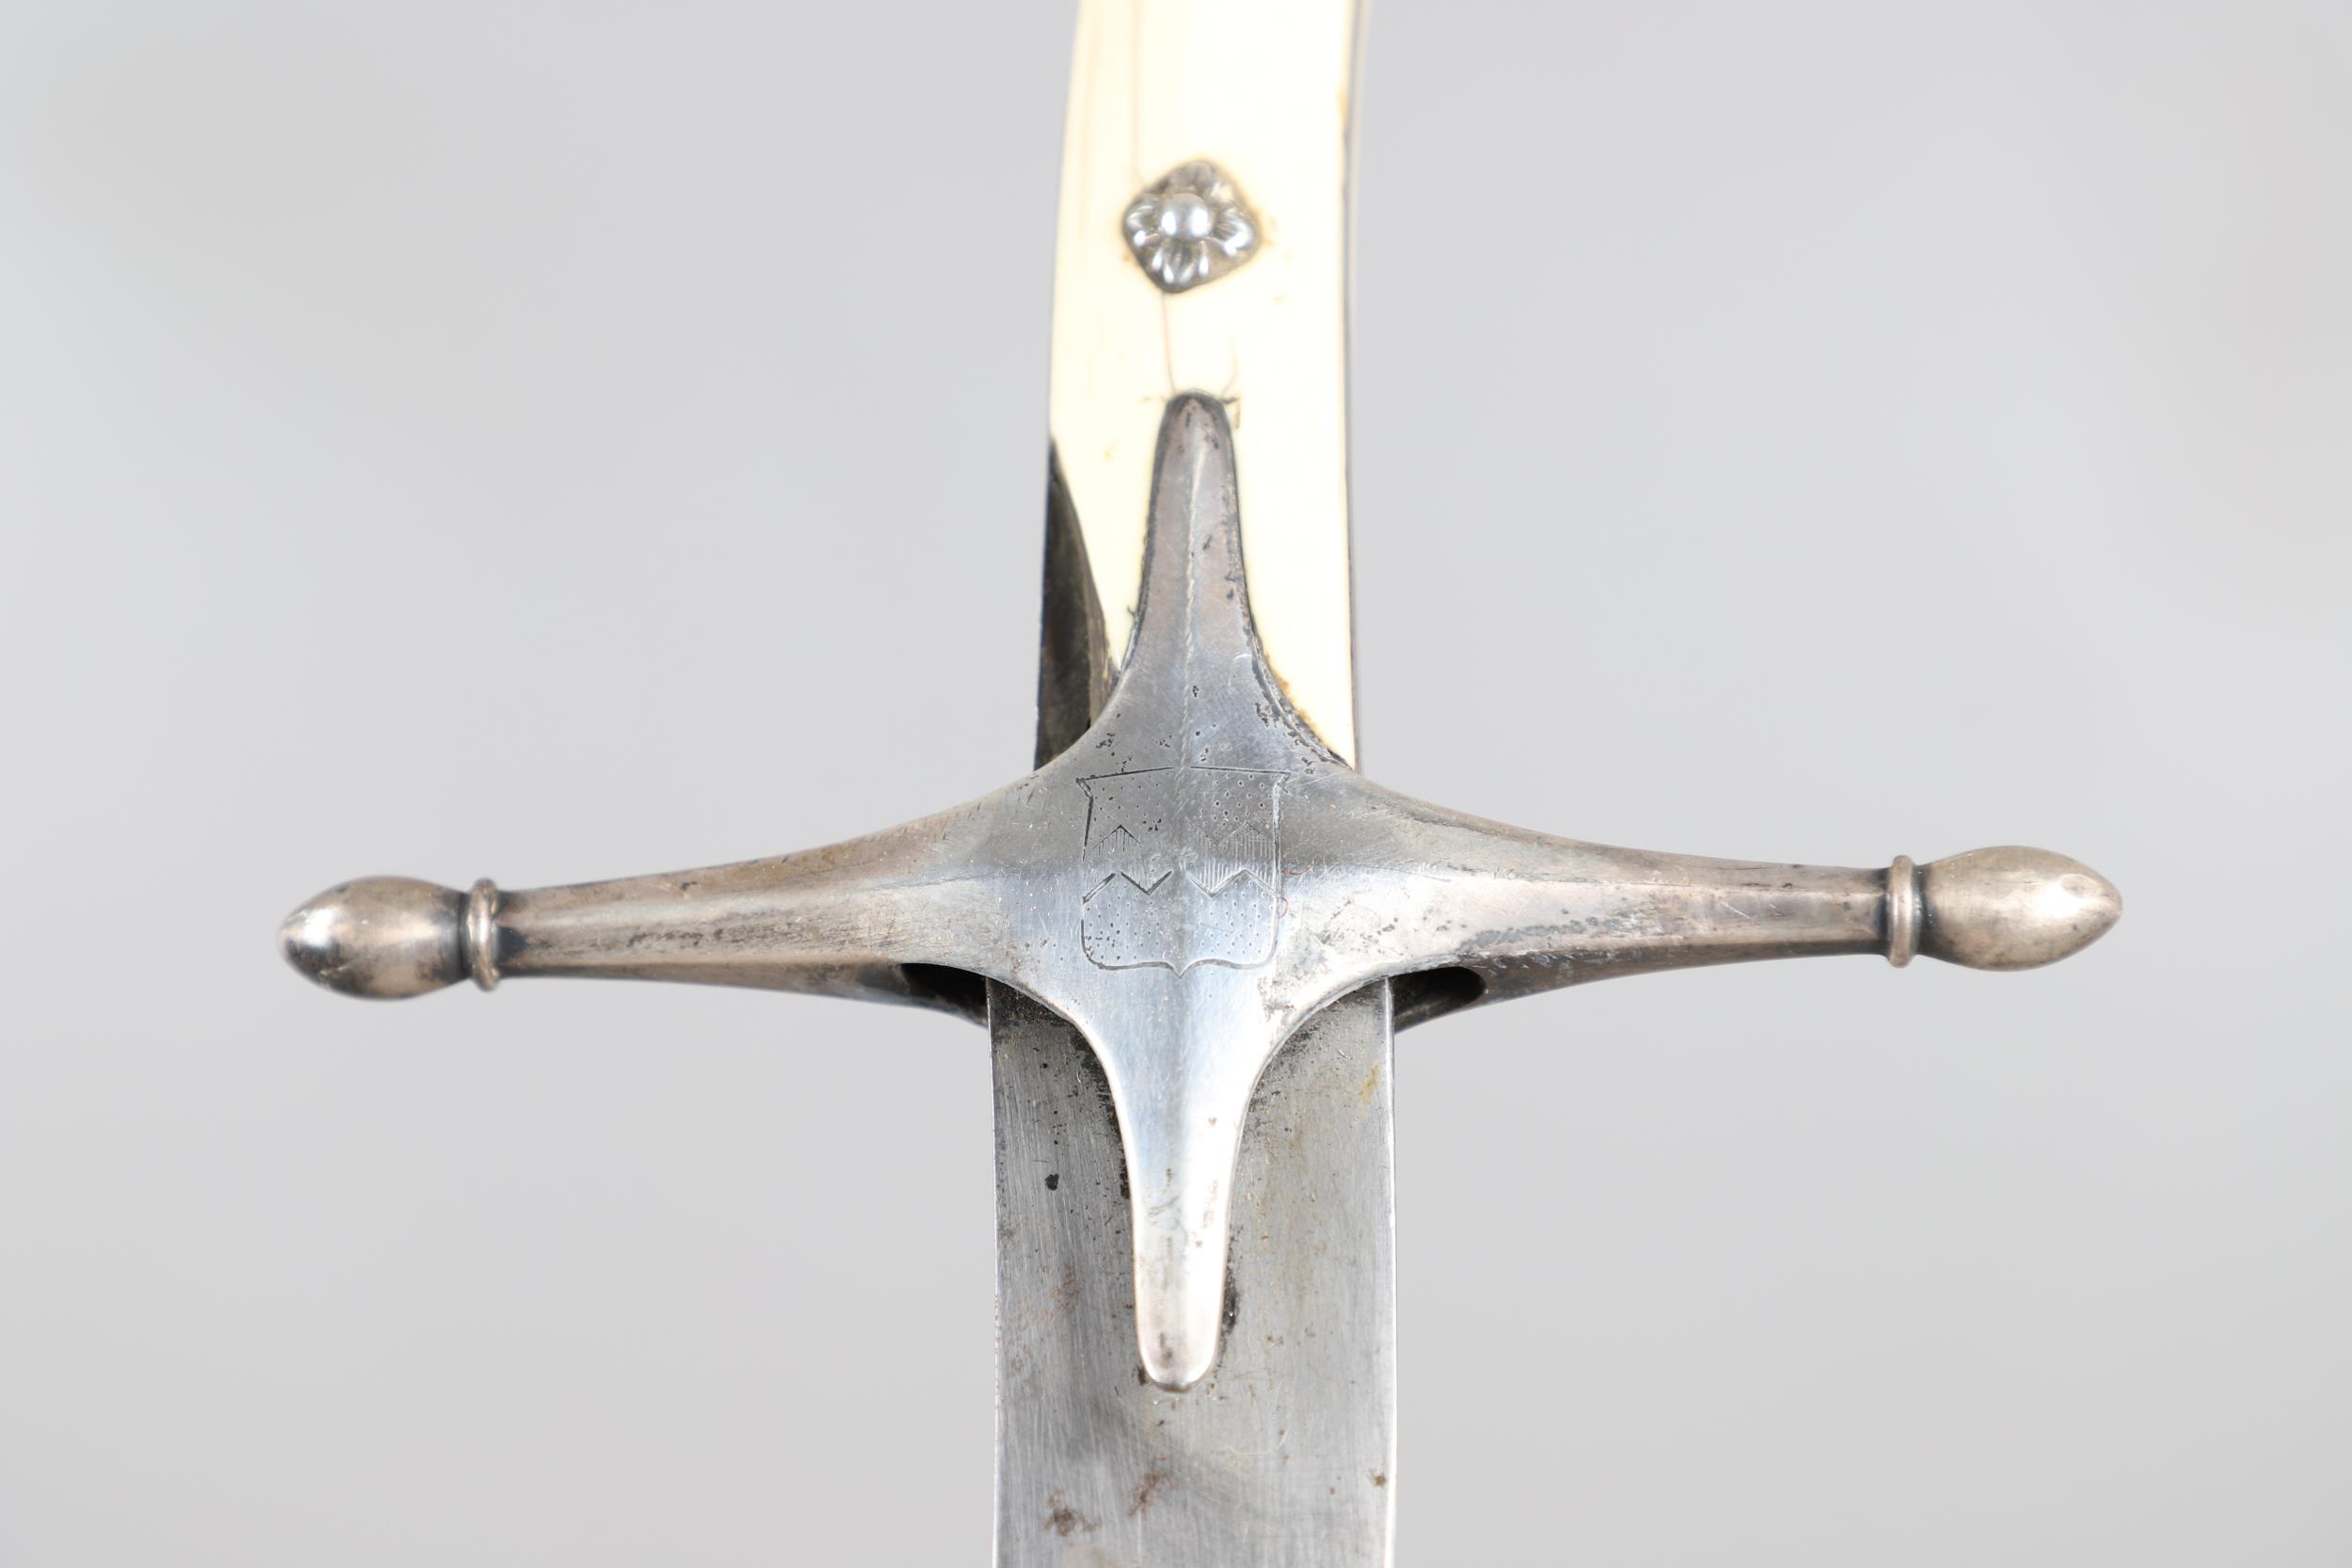 A NINETEENTH CENTURY IVORY HANDLED MAMELUKE SWORD MARKED FOR THE VAVASOUR FAMILY. - Image 12 of 15